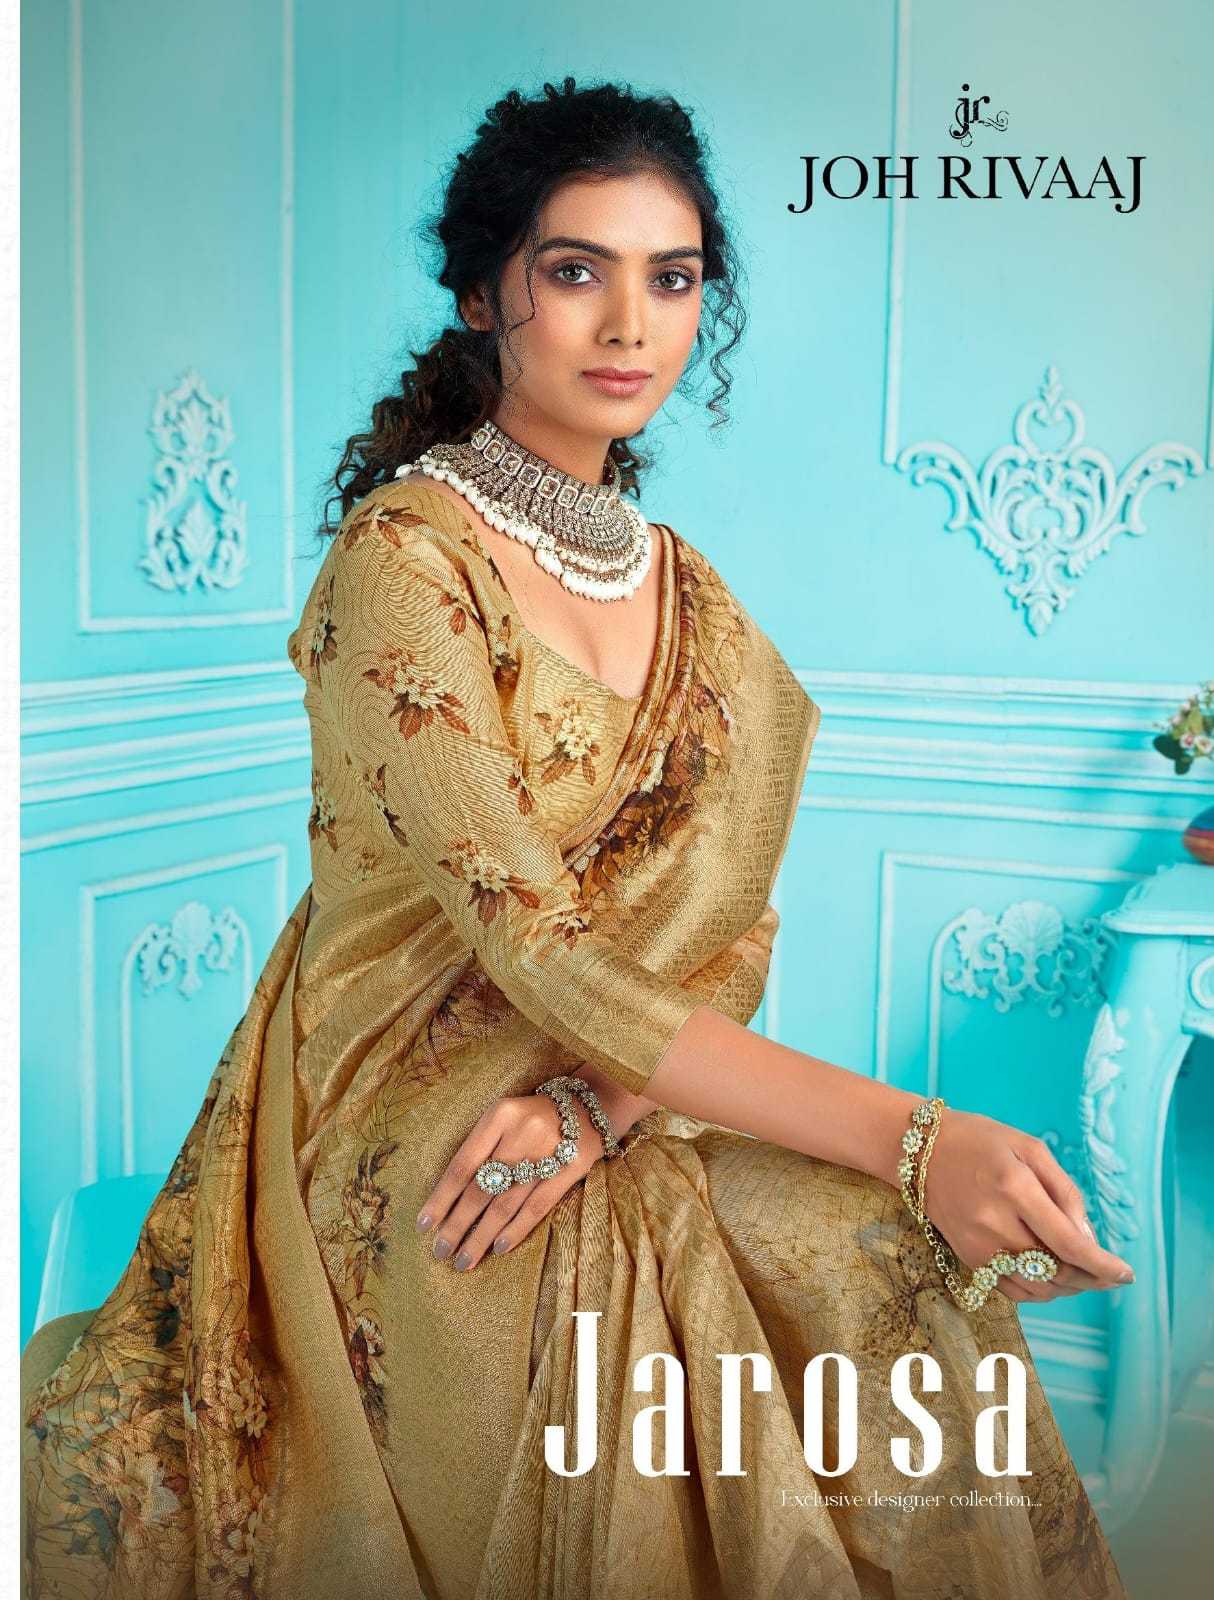 joh rivaaj jarosa 81001-81009 latest collection of organza saree festive wear 